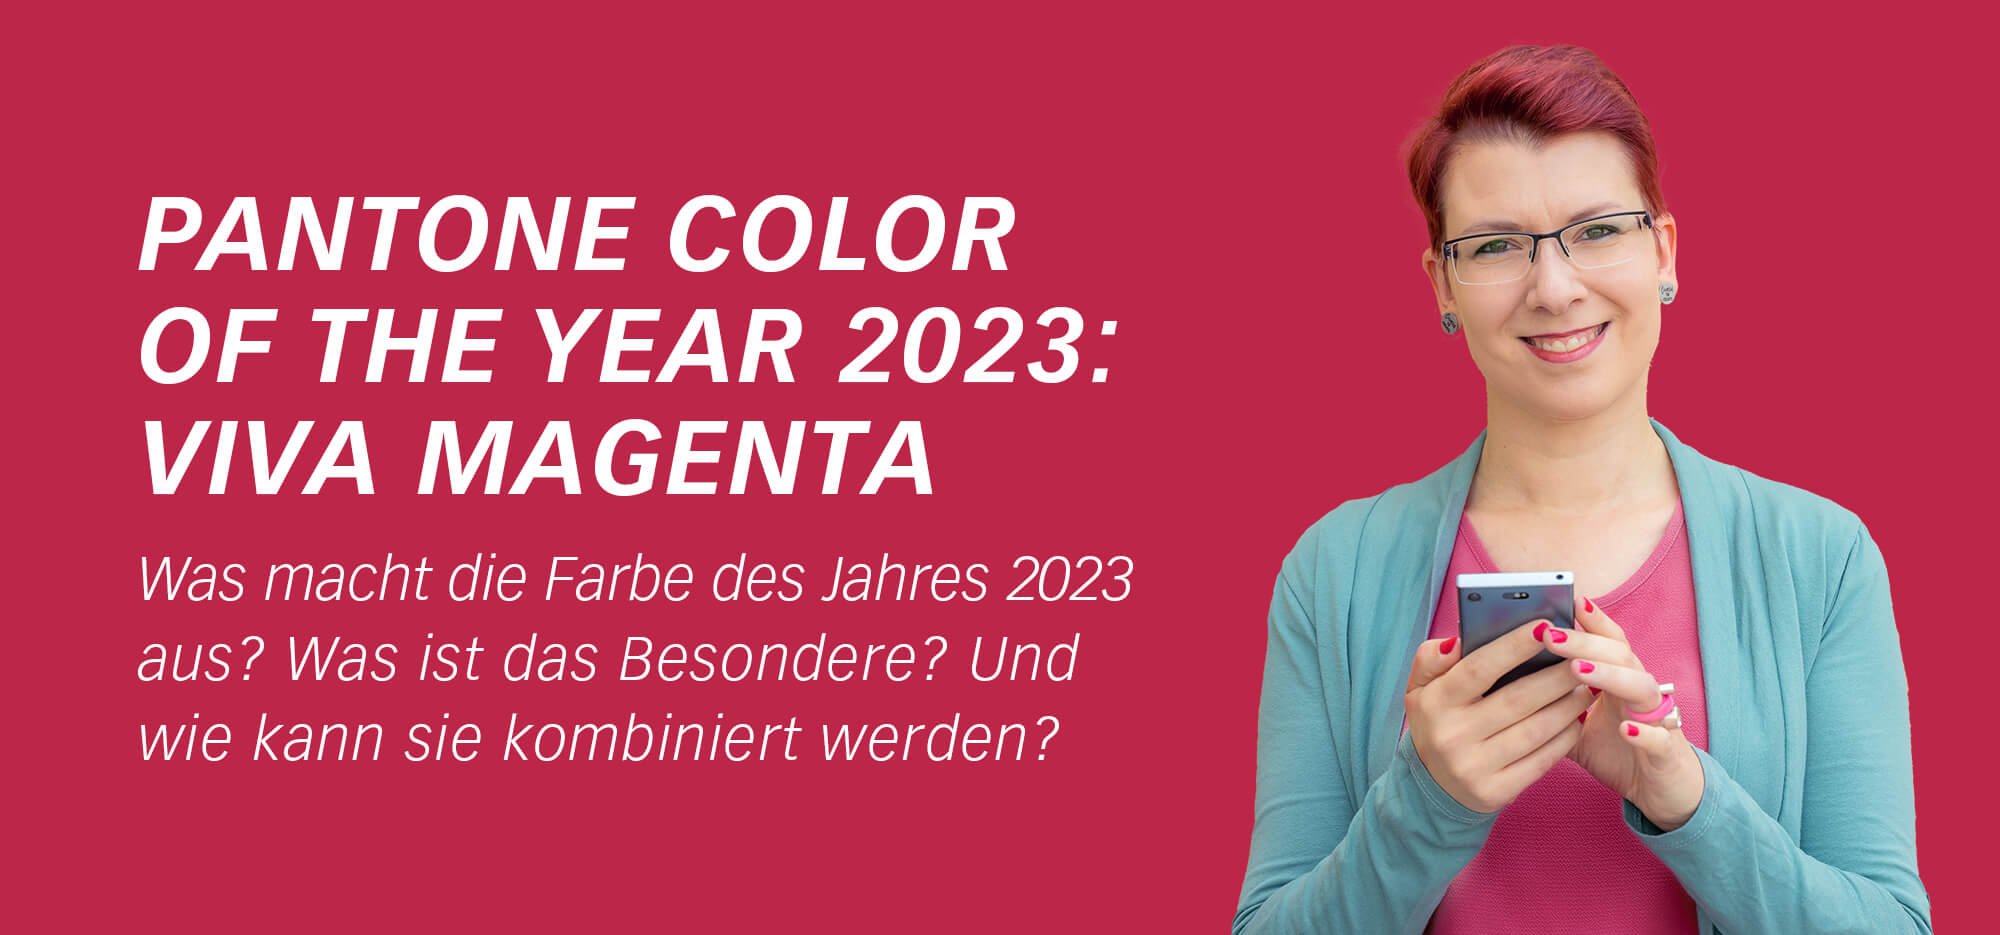 Pantone Farbe des Jahres 2023 Viva Magenta vorgestellt